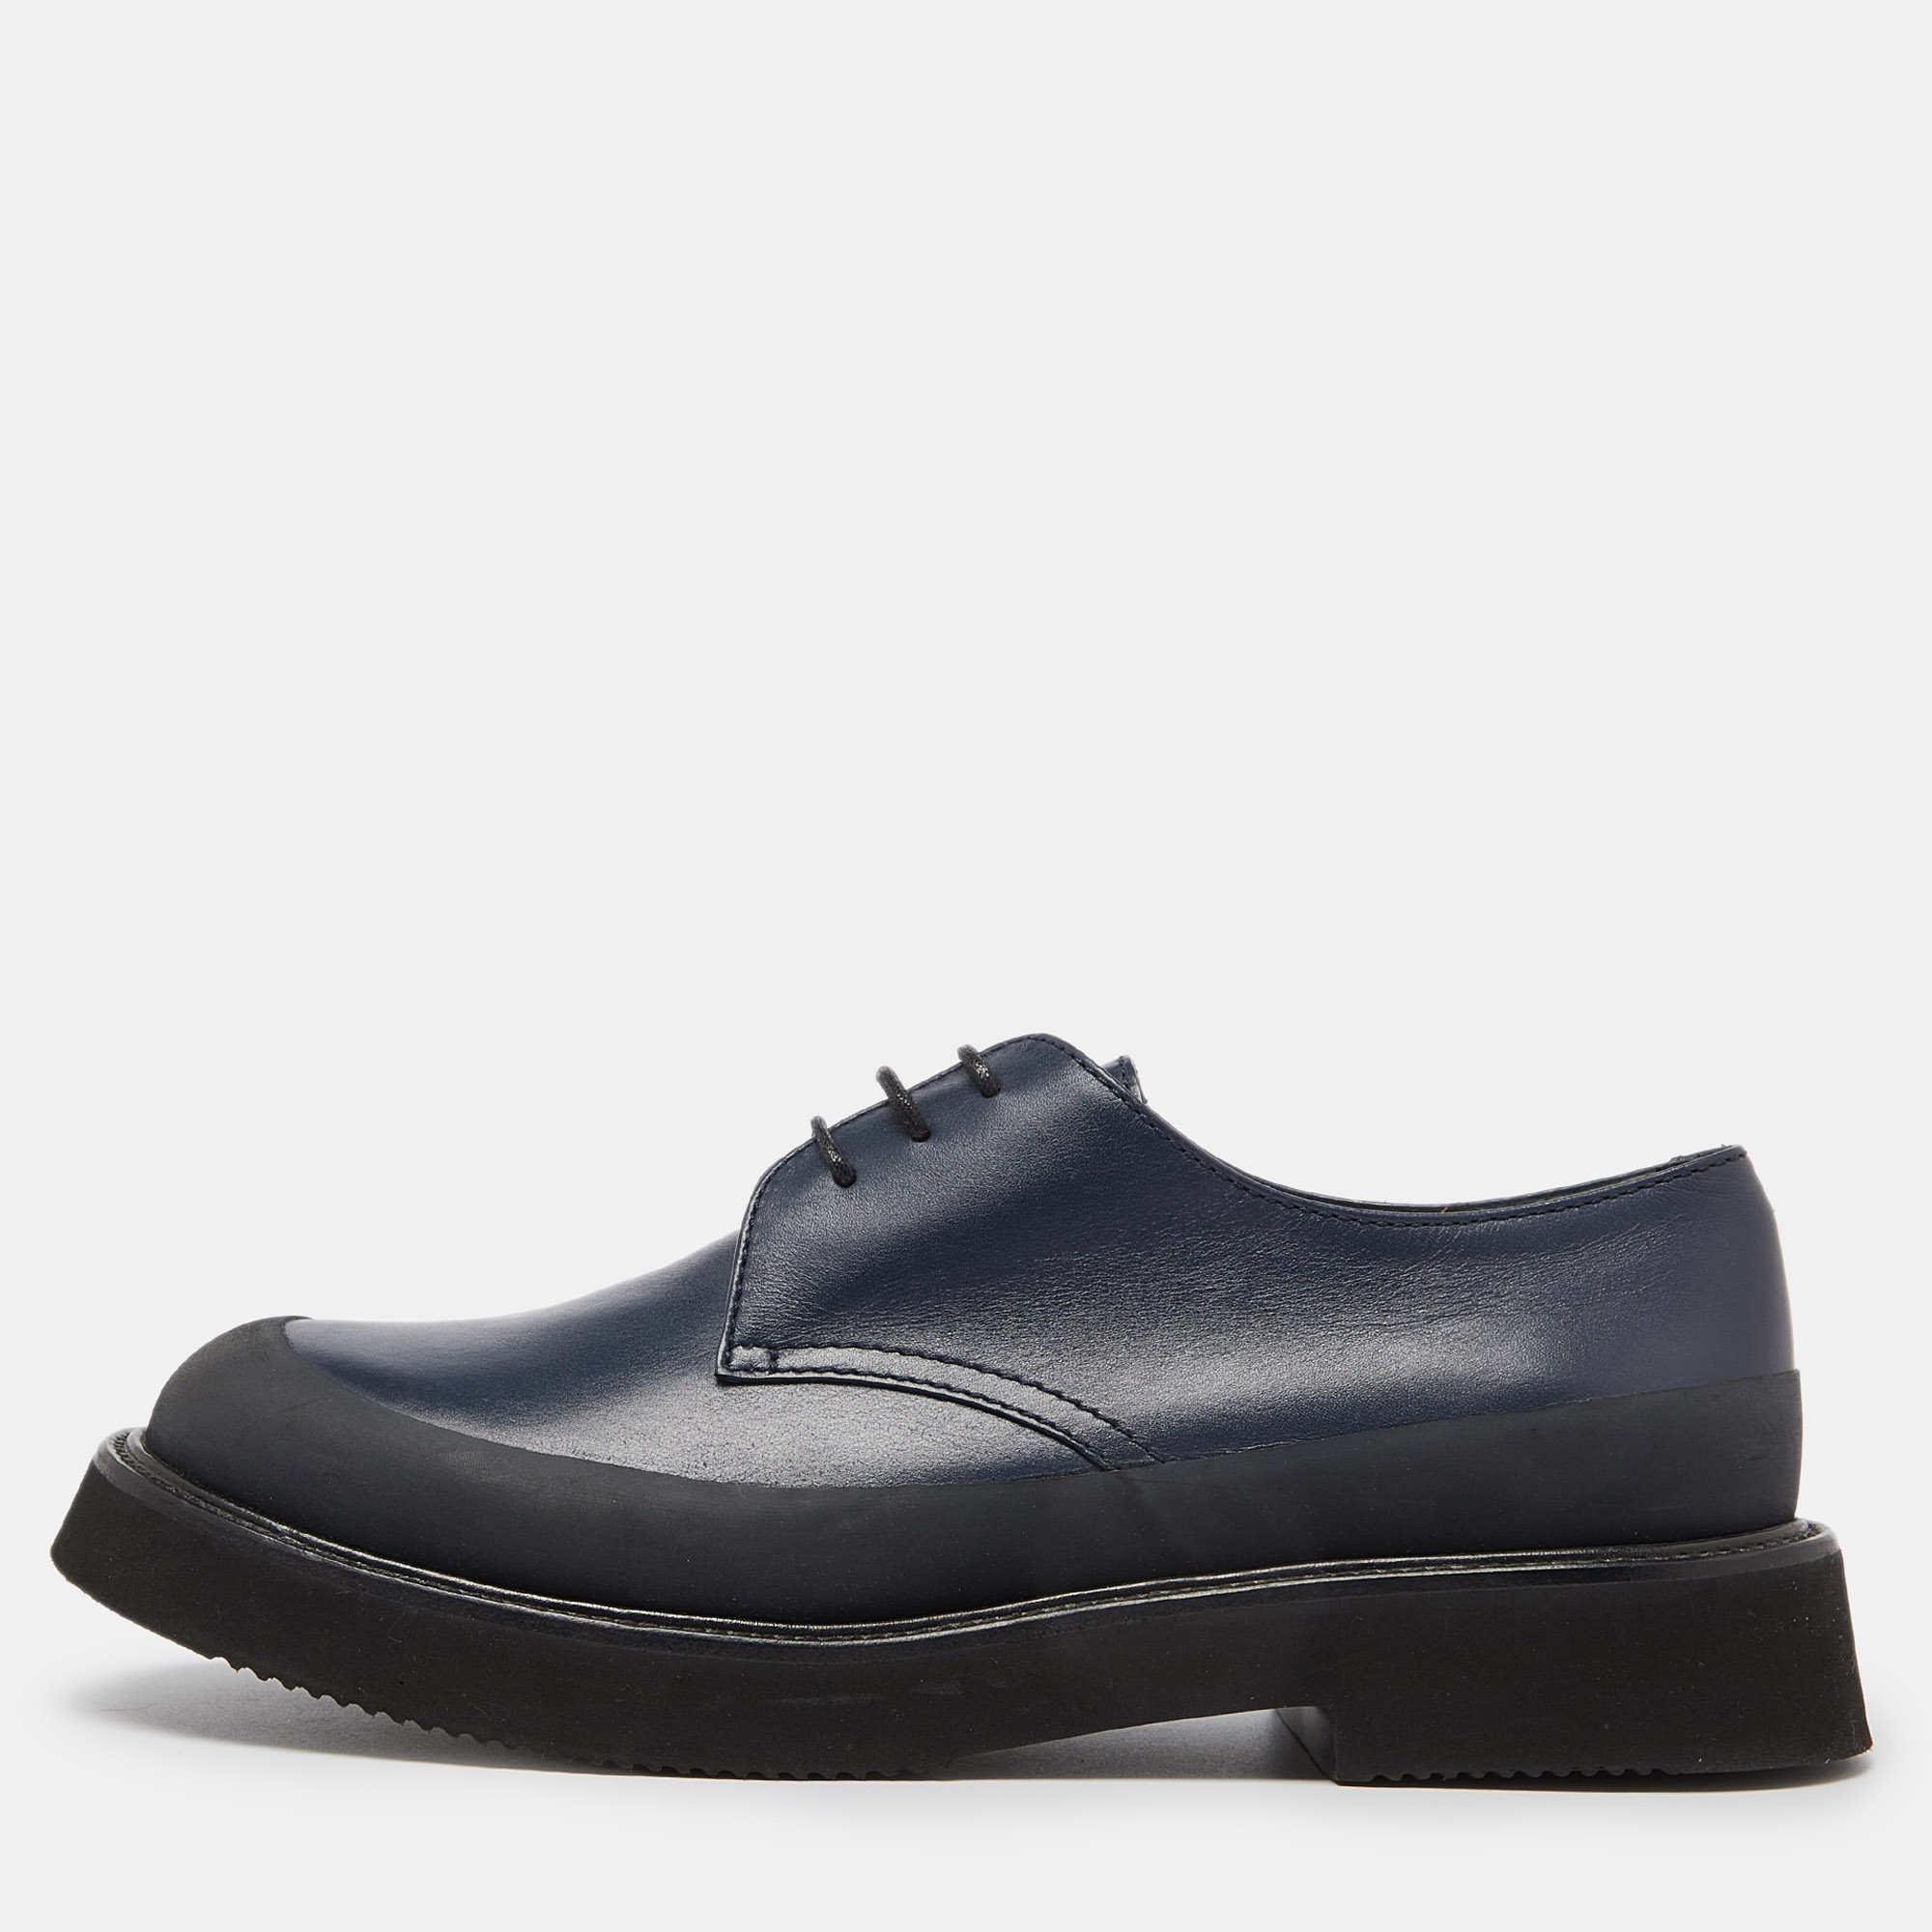 Celine navy blue leather platform derby sneakers size 39